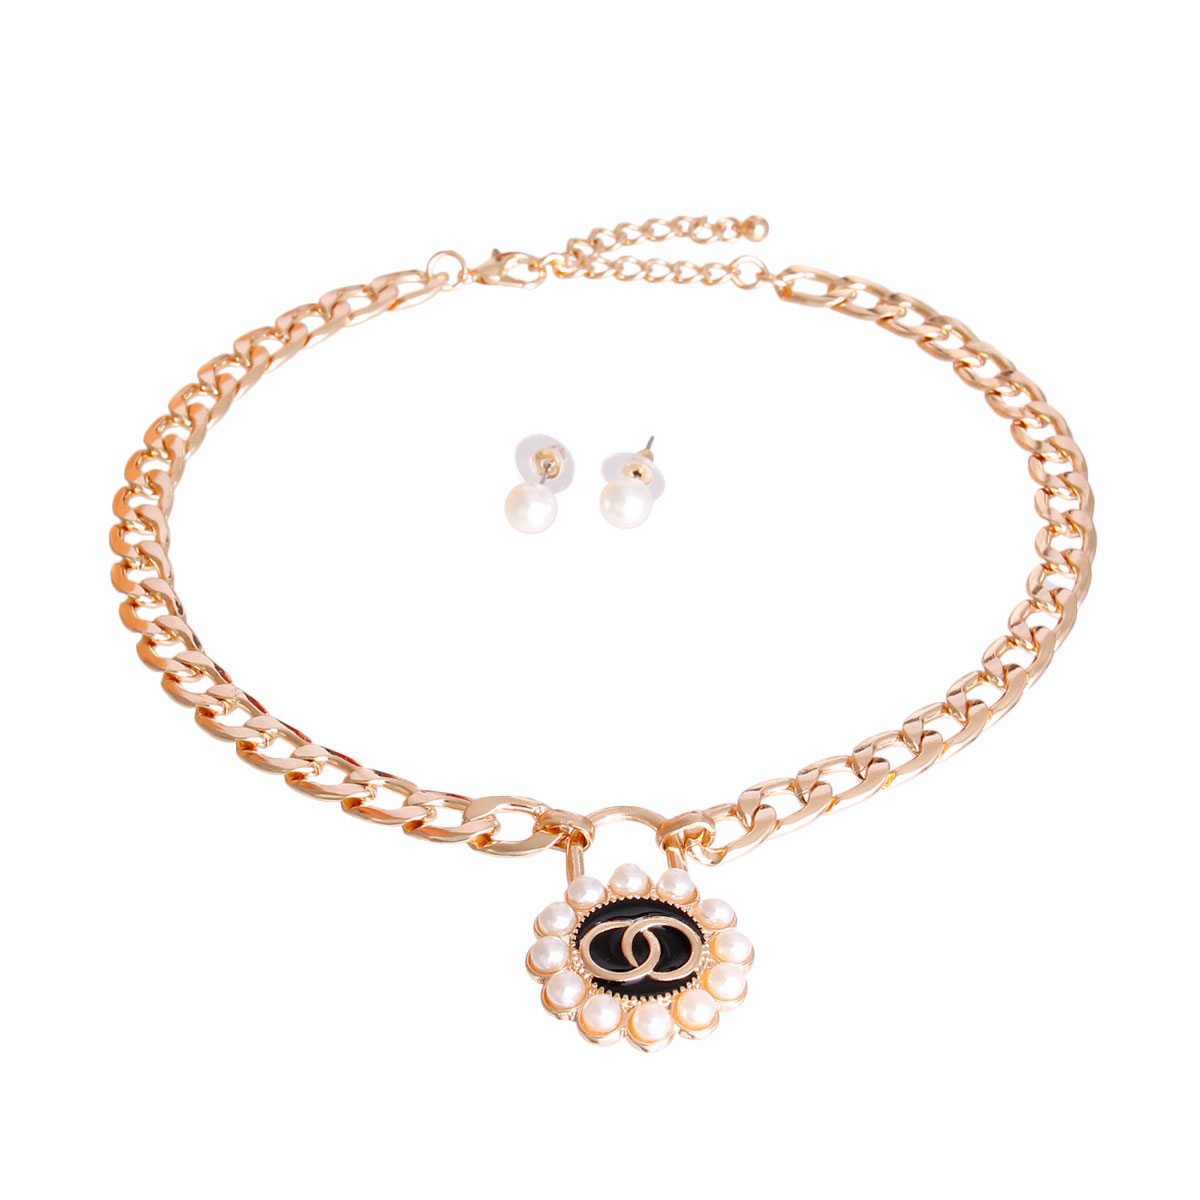 Designer Dupe Gold Chain Lock Necklace